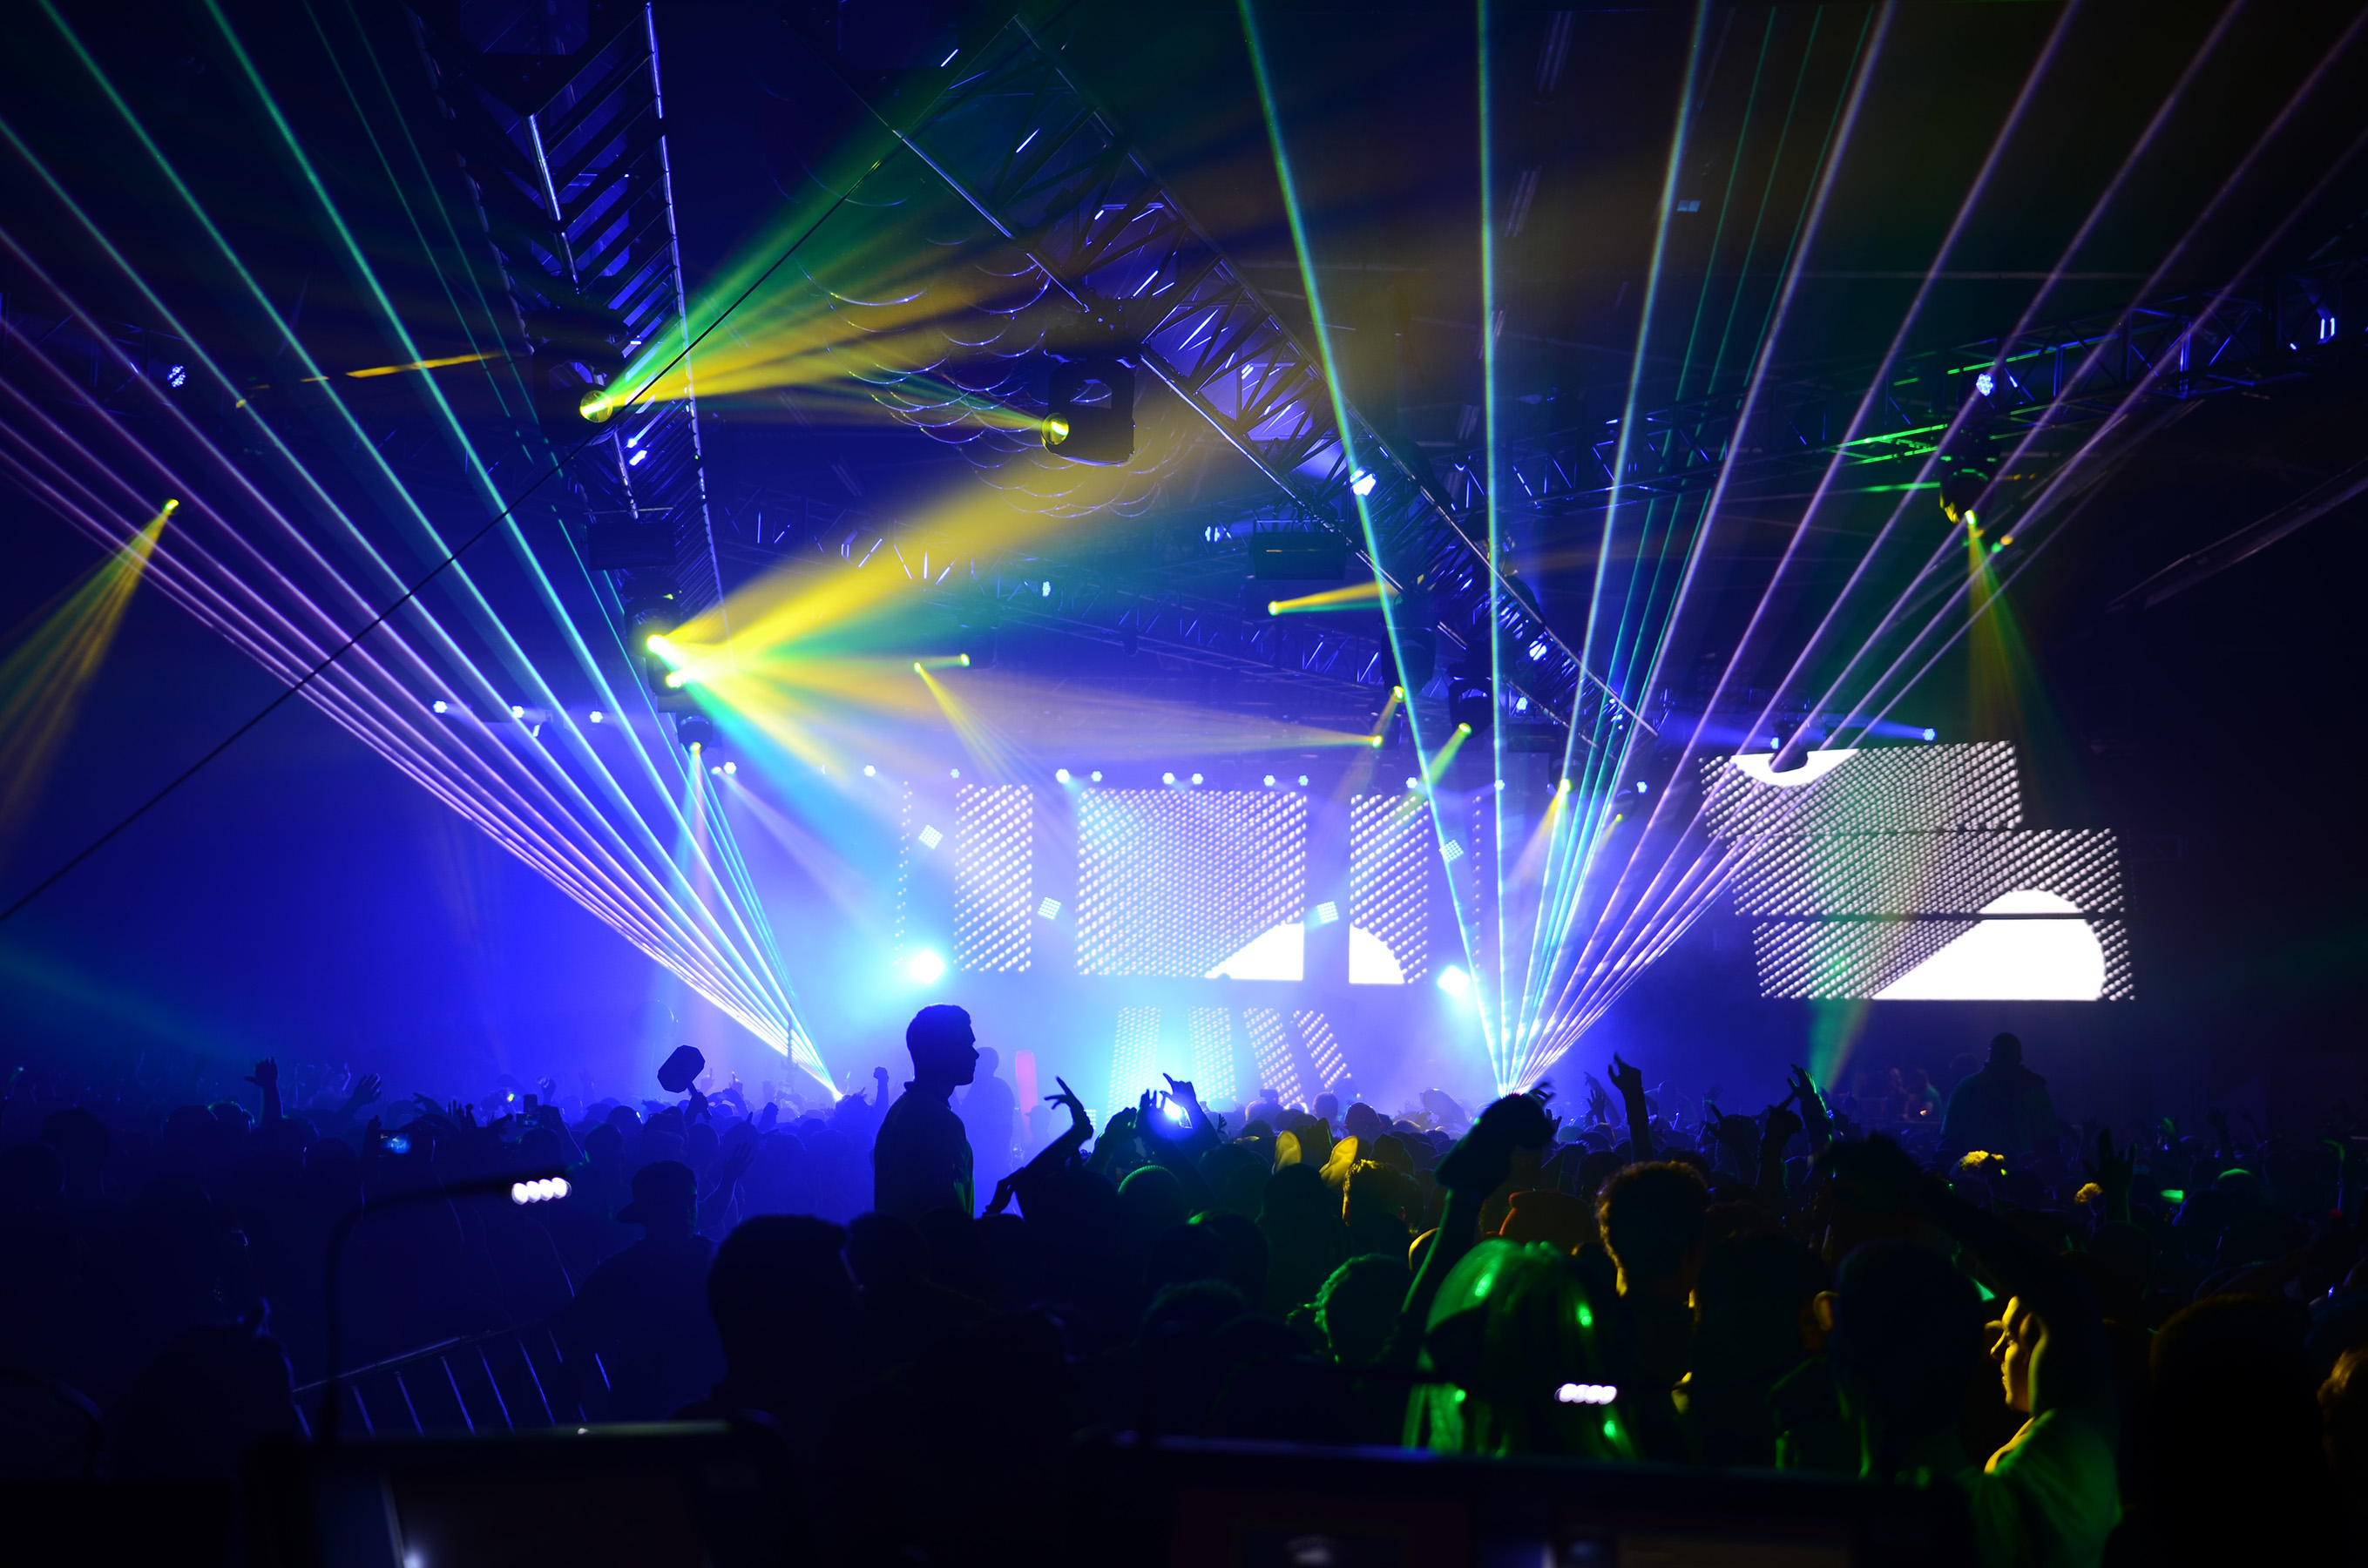 Night club party laser lighting effect 01